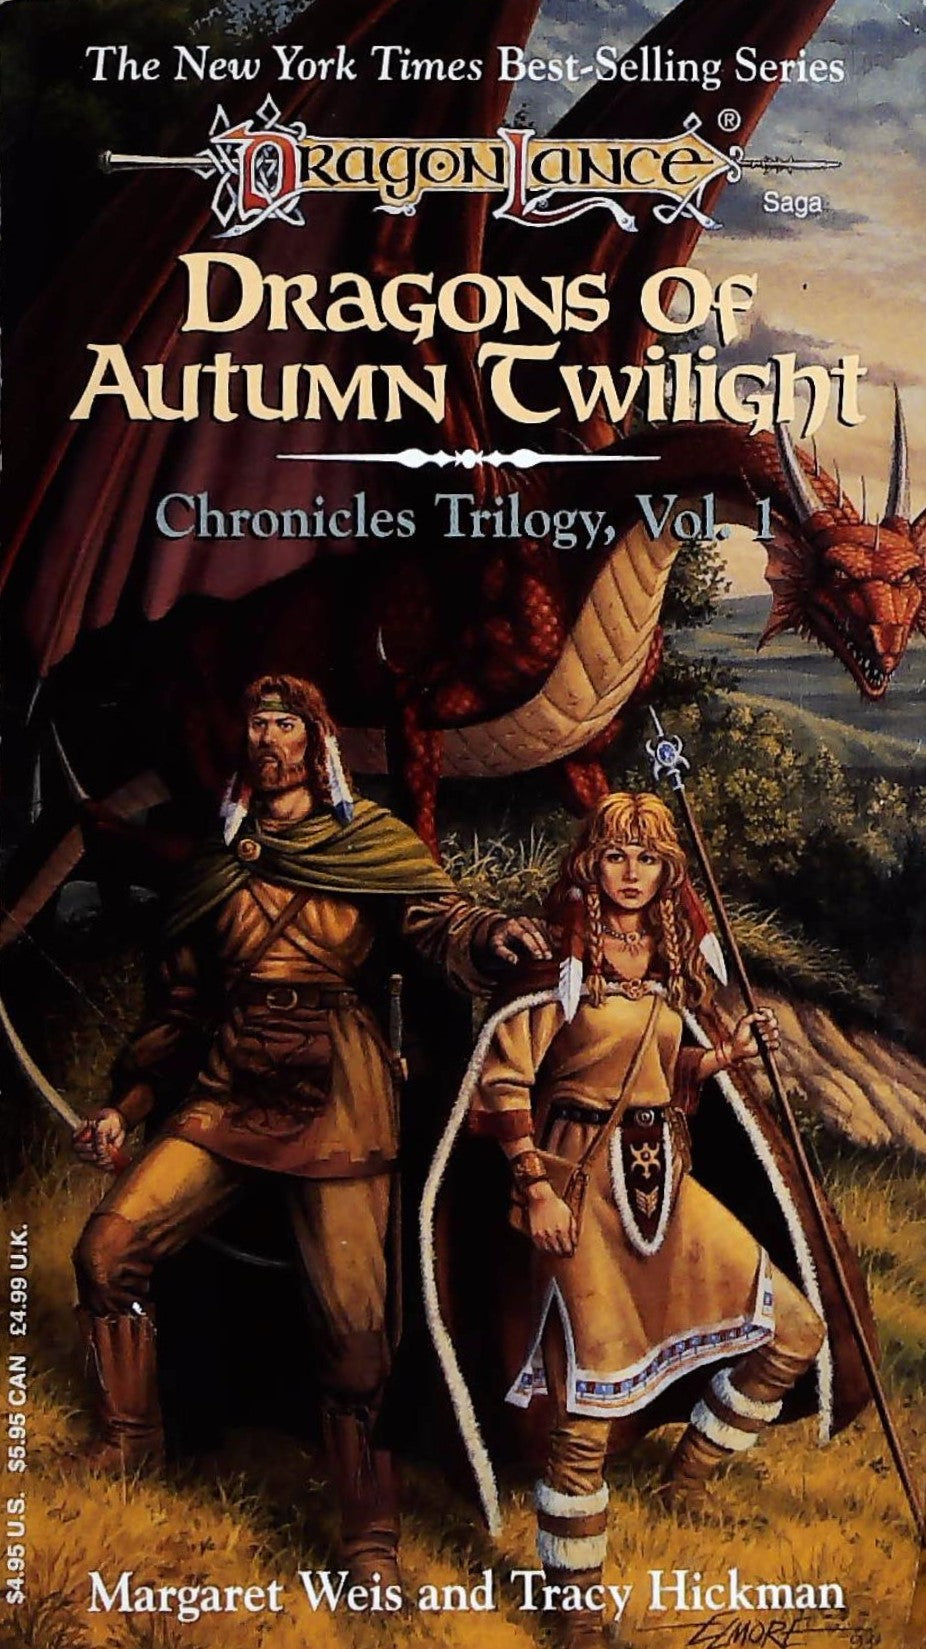 Livre ISBN 0880381736 DragonLance : Chronicles # 1 : Dragons of Autumn Twilight (Margaret Weis)